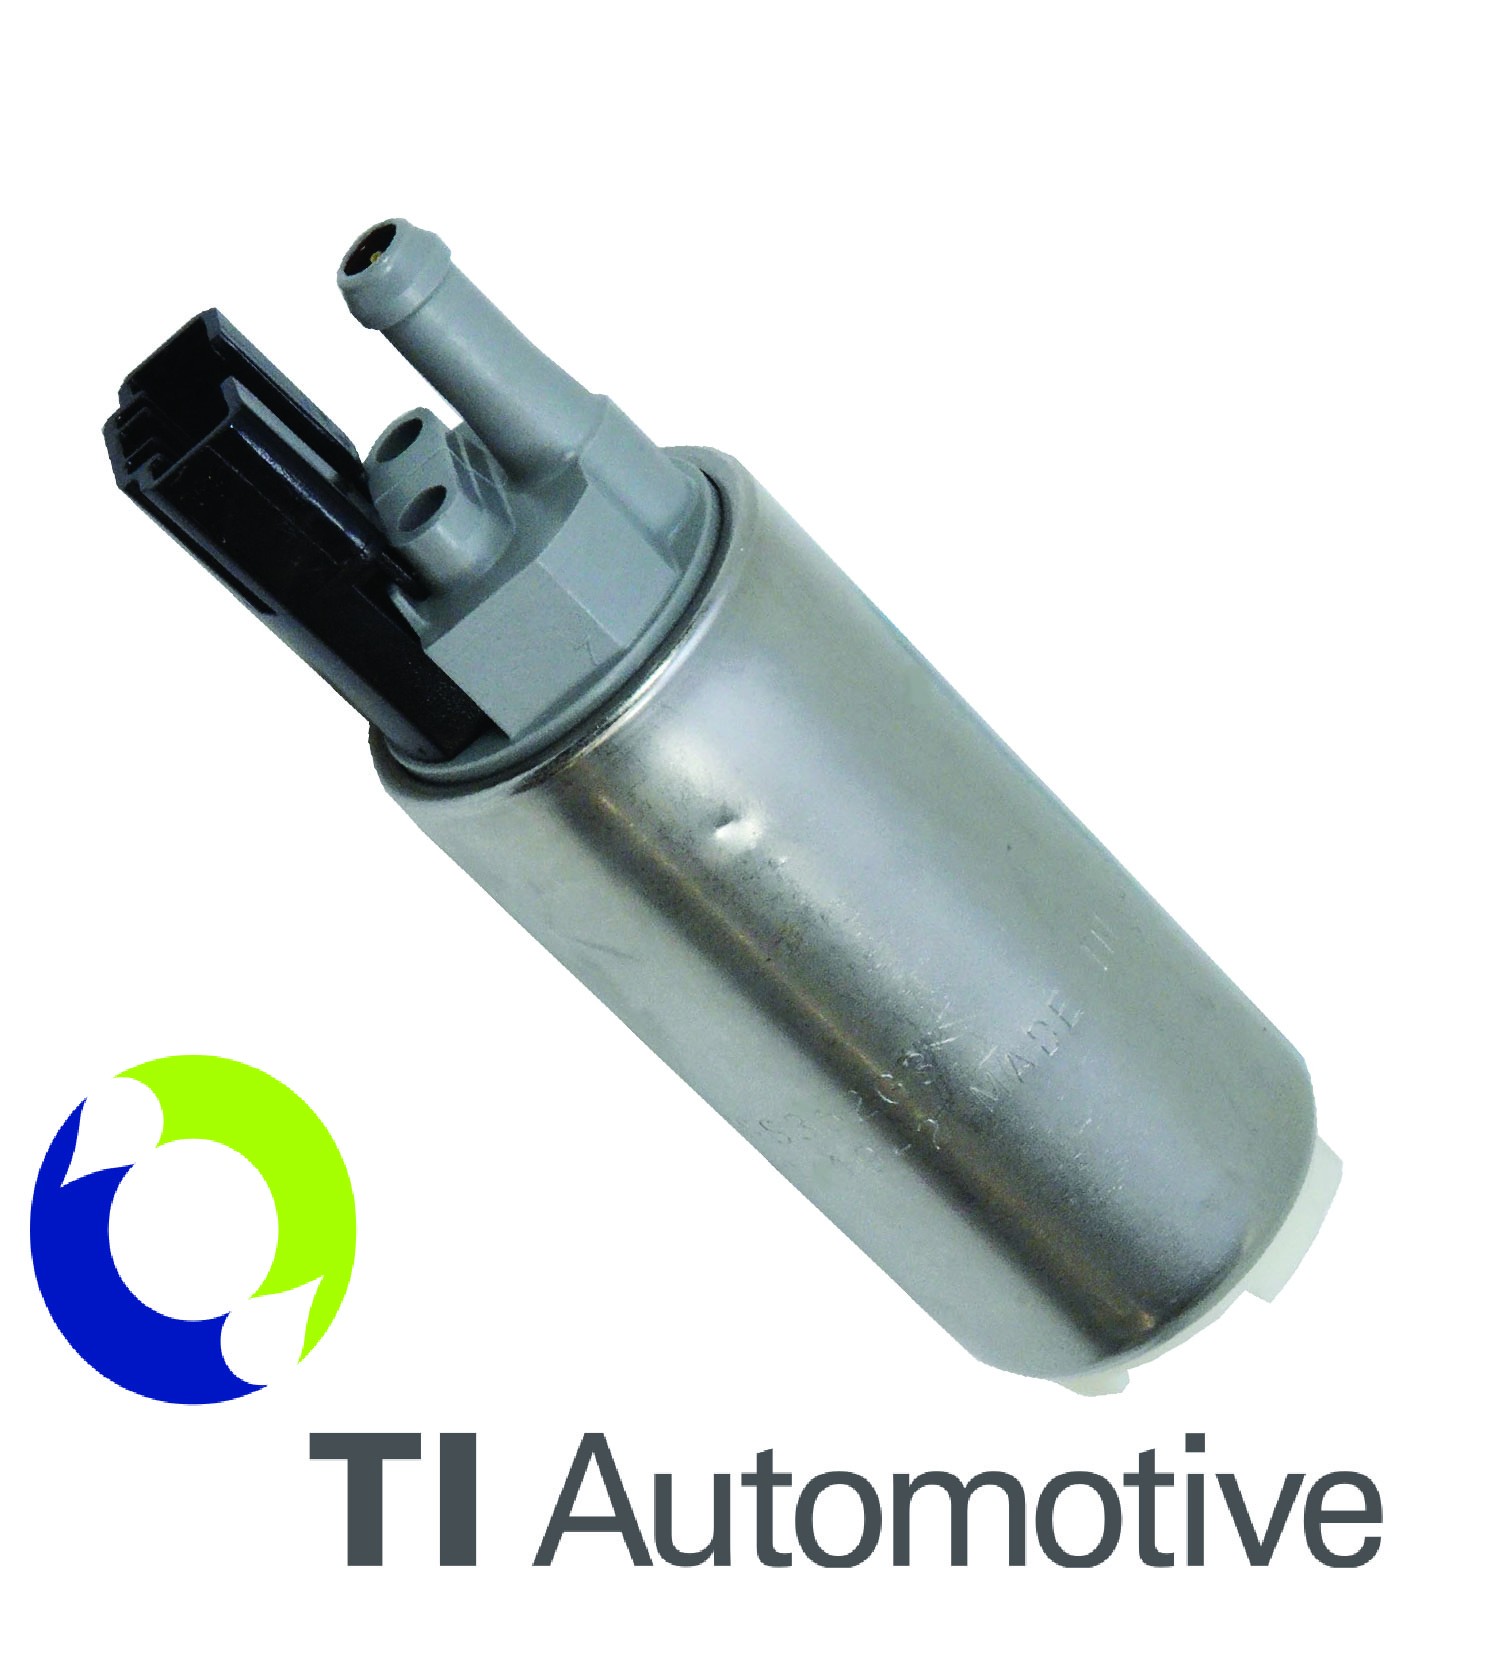 Ti Automotive (Walbro) 350 lph In-Tank Motorsport Fuel Pumps